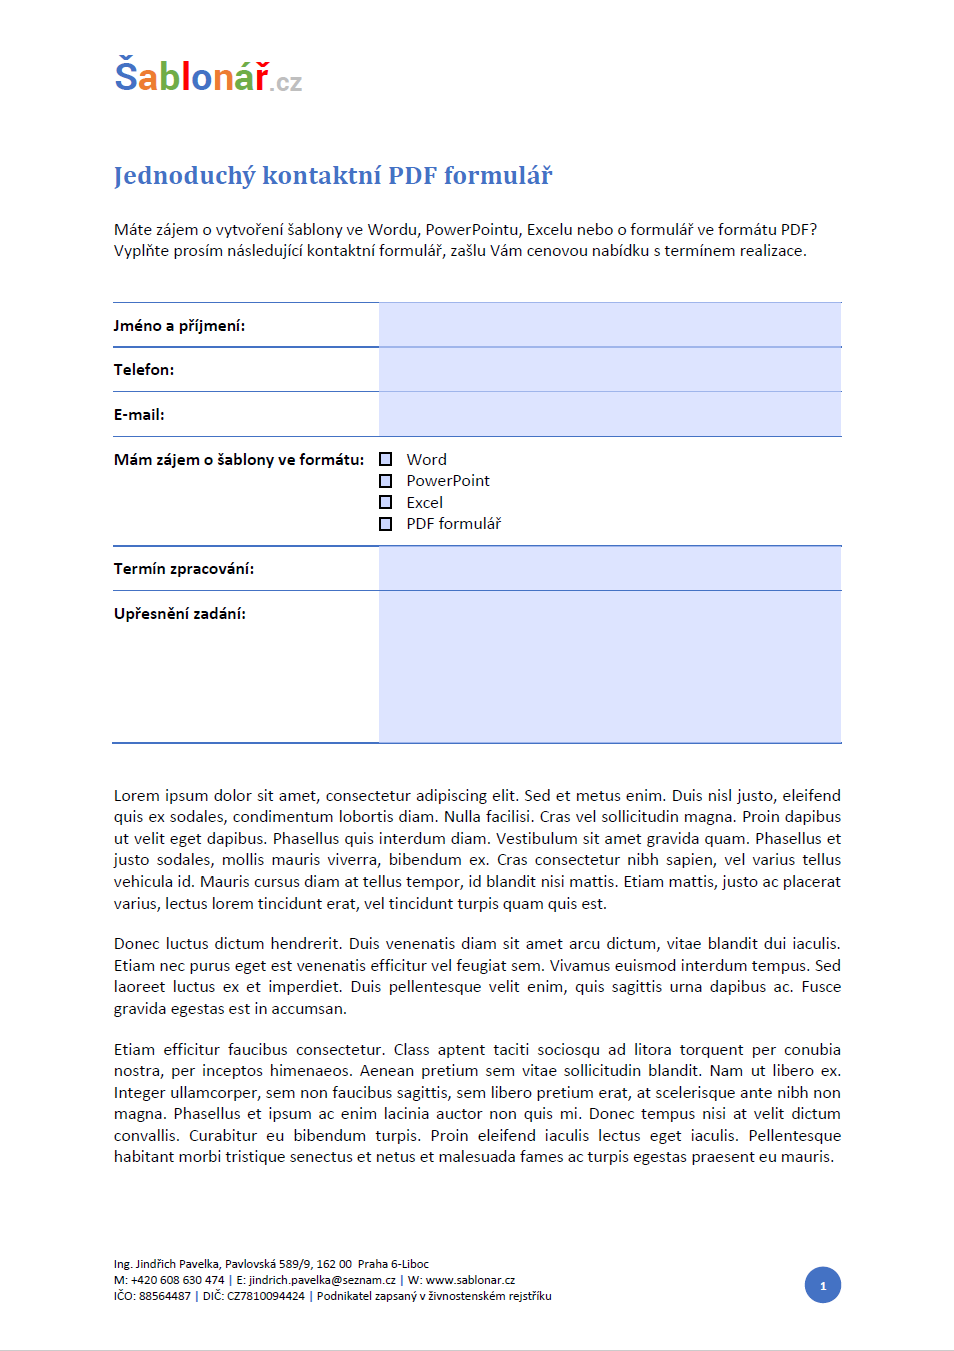 Ukázka PDF formuláře